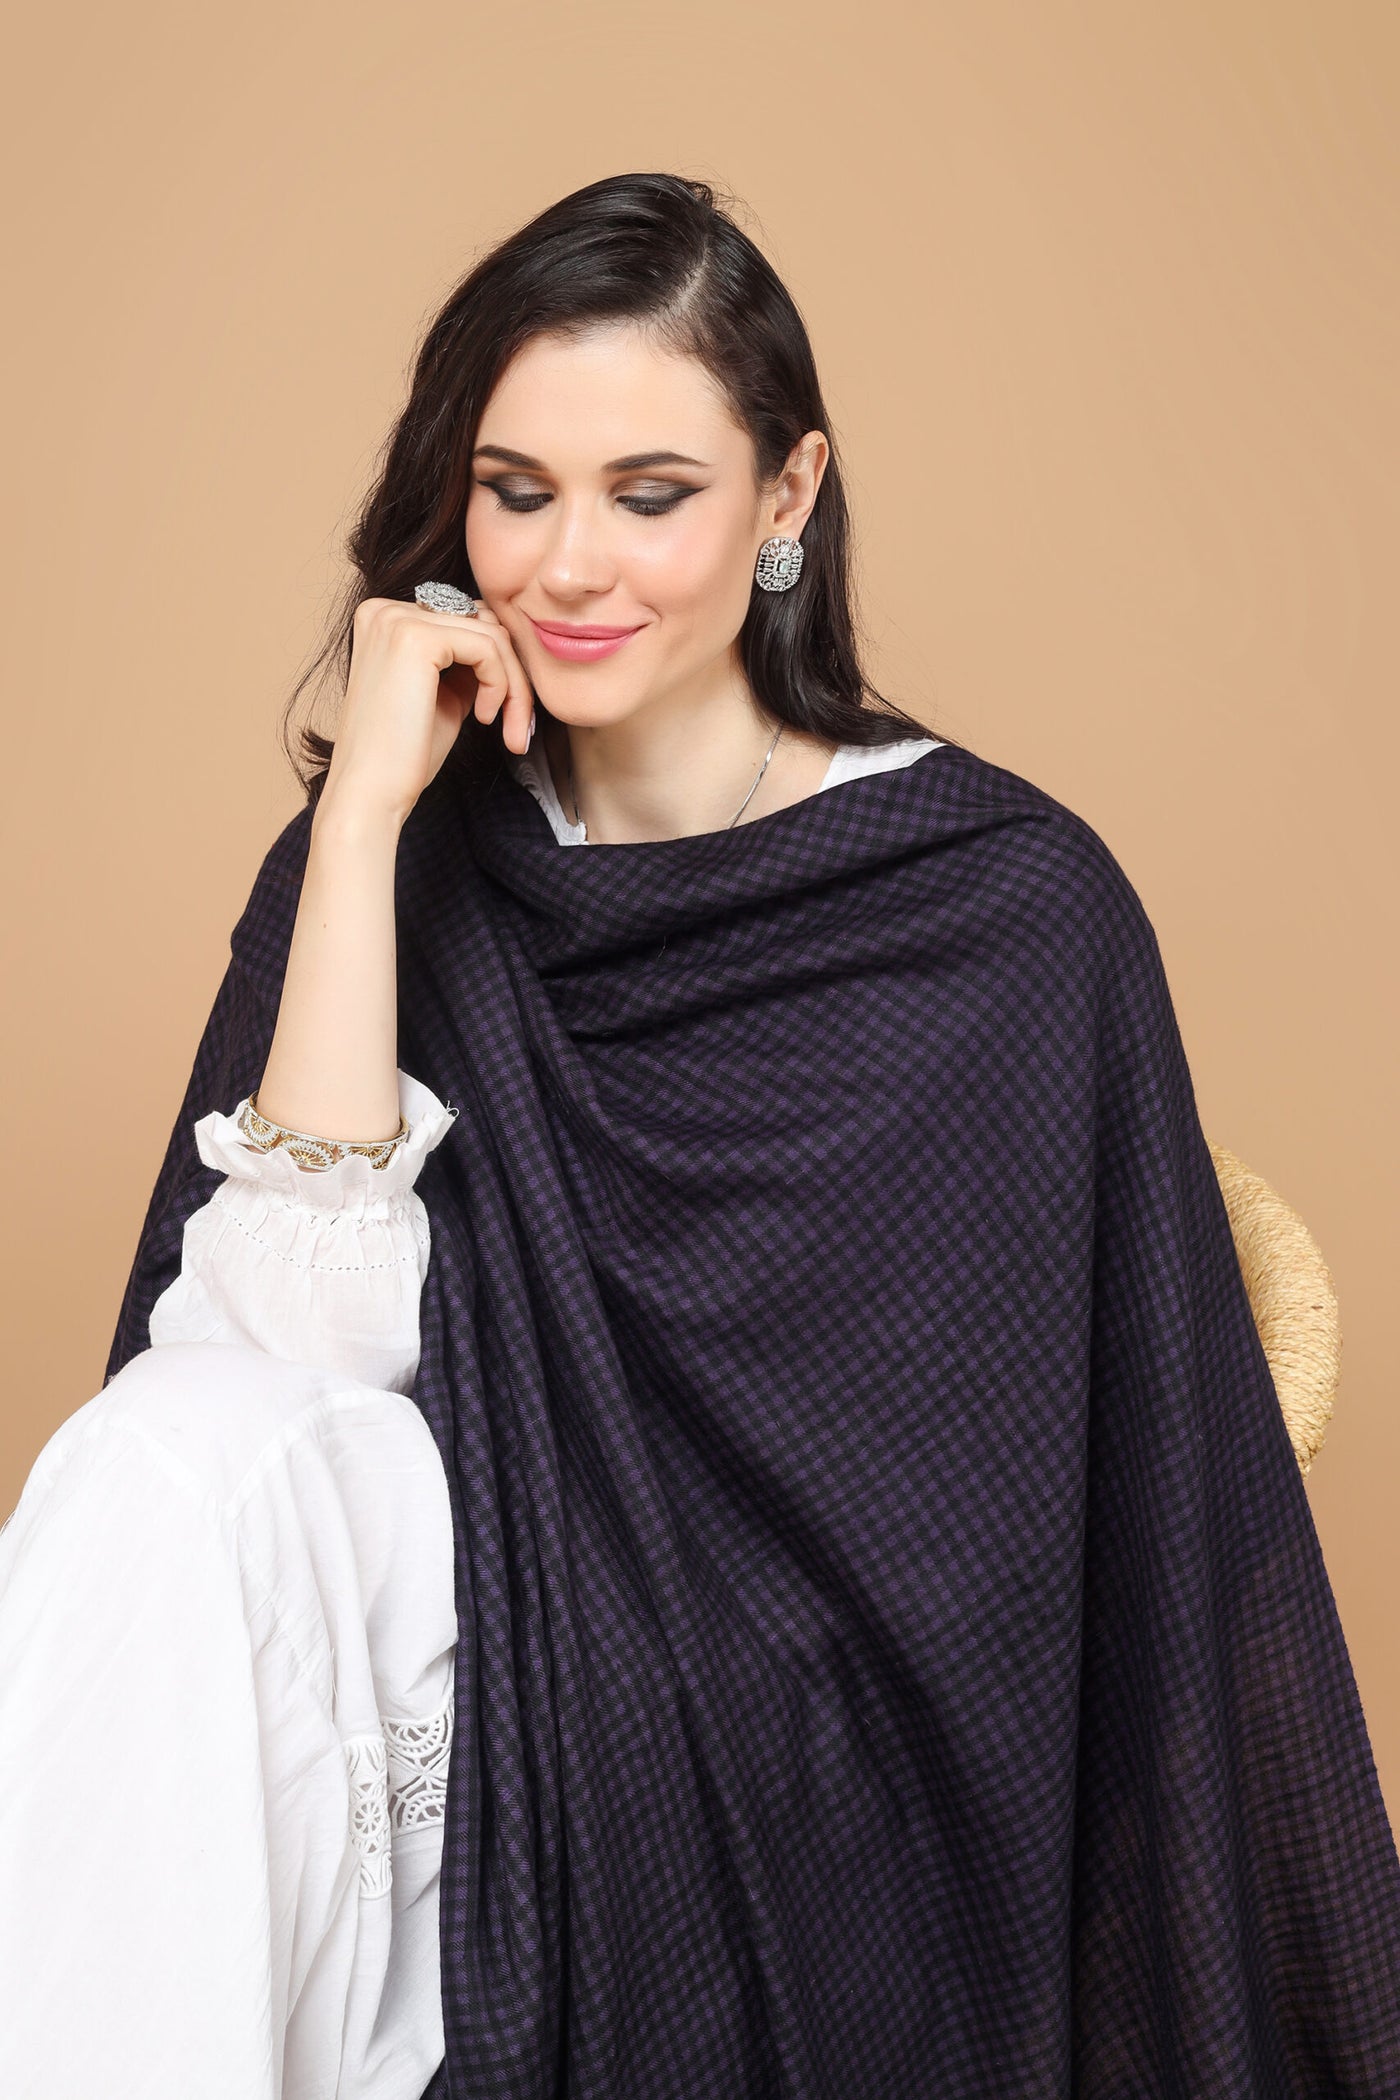 Purple and black Pashmina check shawl